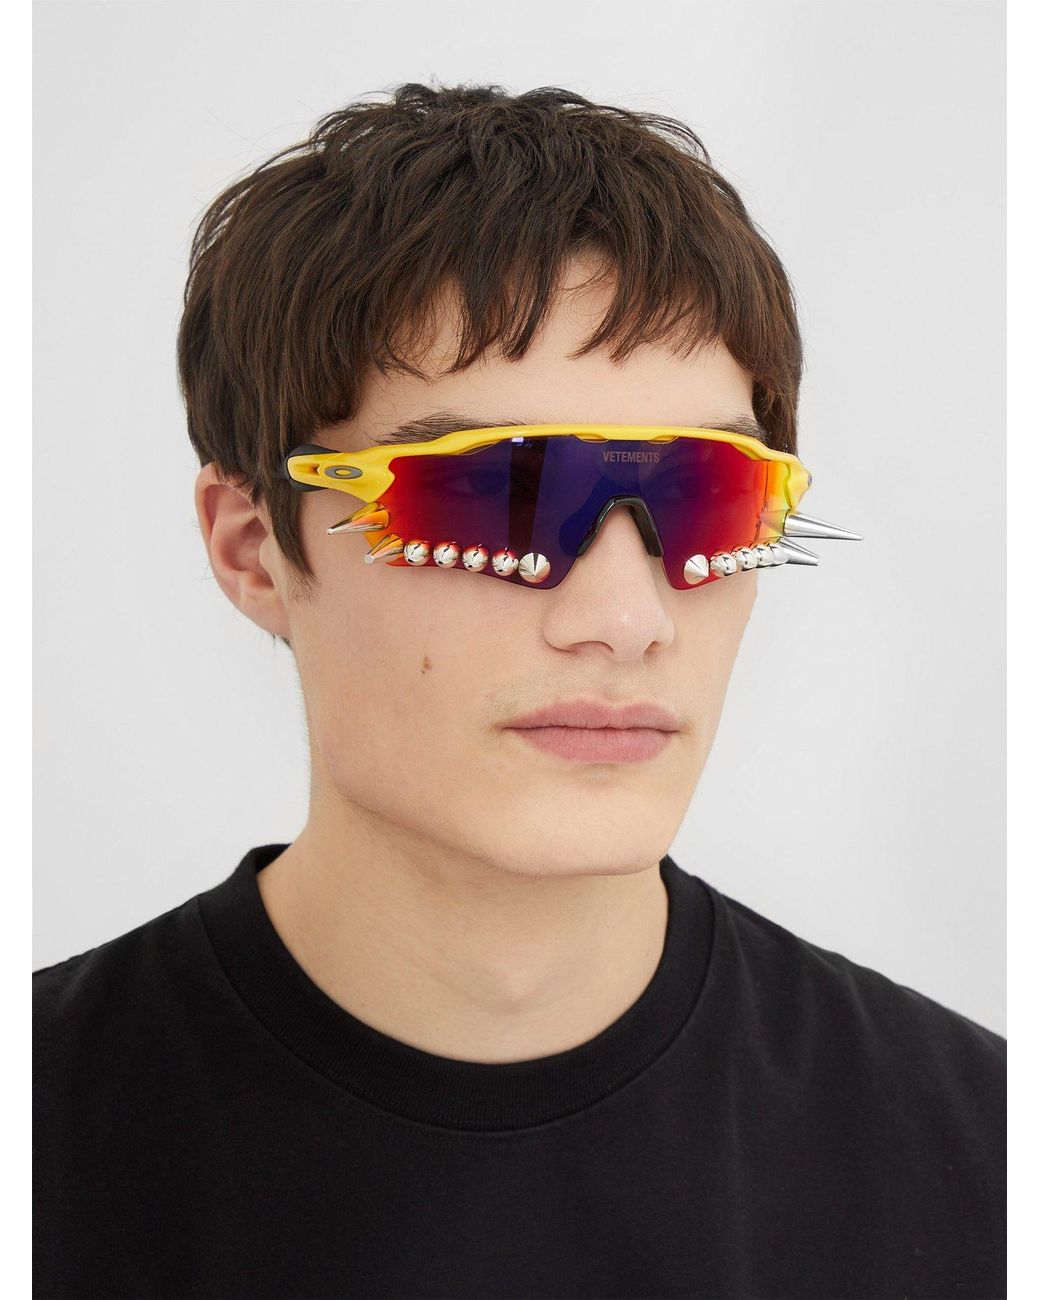 Vetements Rubber X Oakley Spikes 400 Sunglasses for Men | Lyst